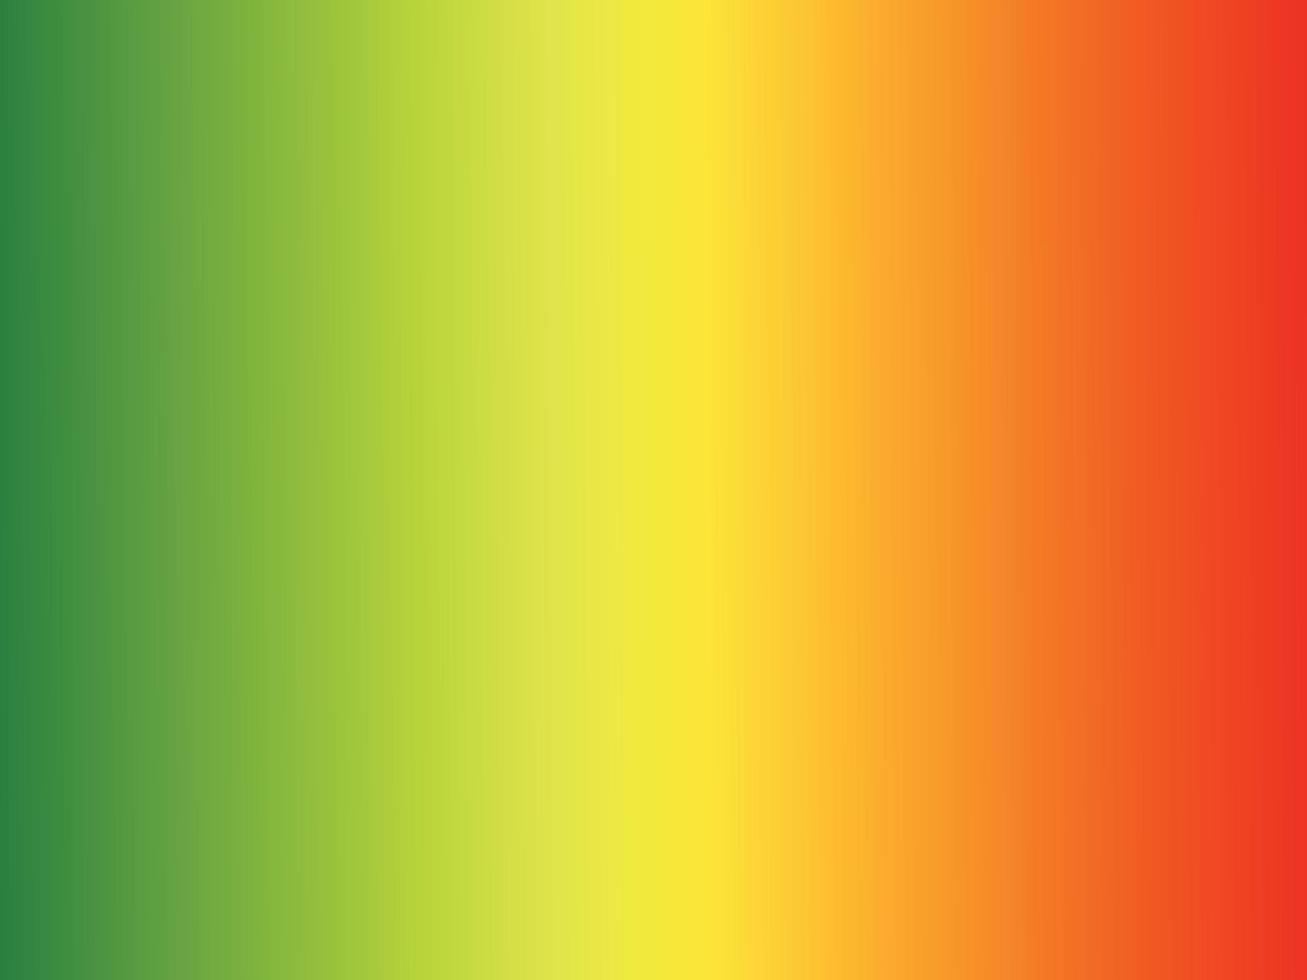 green, yellow, red gradation background design senegal flag vector